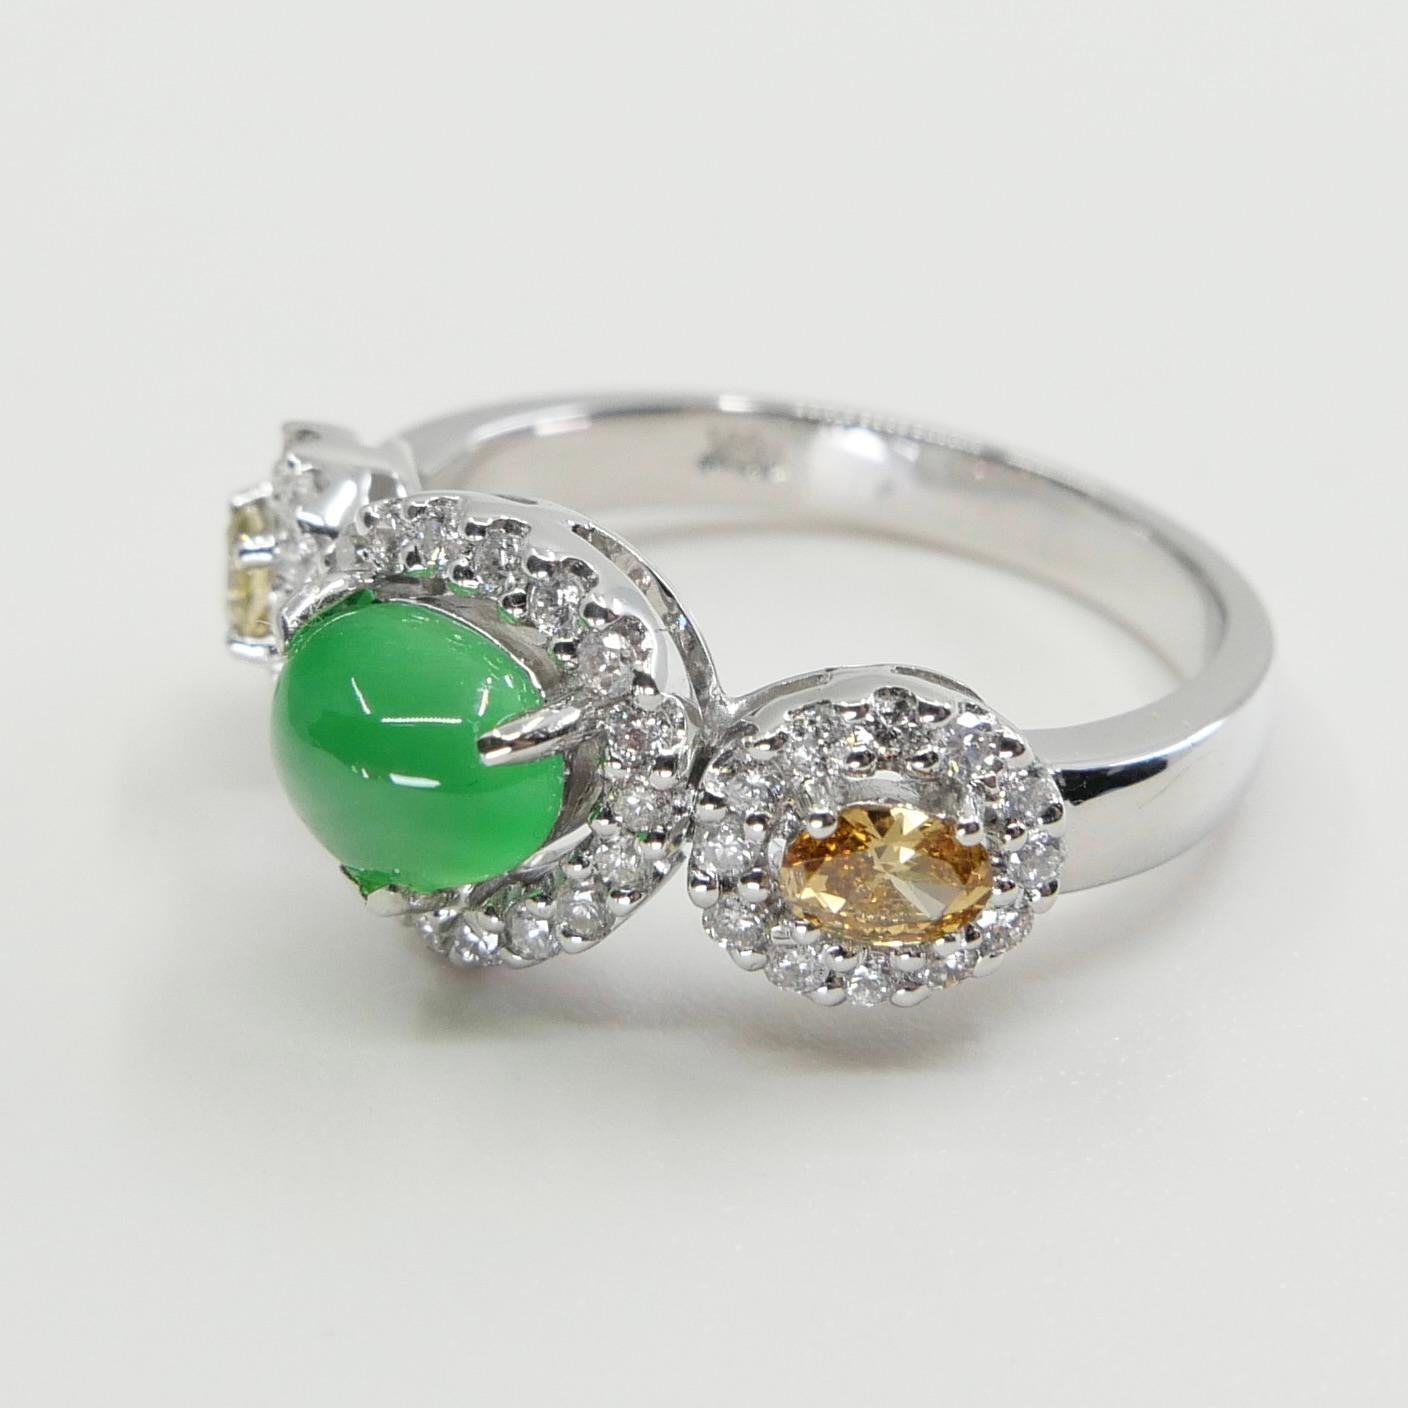 Certified Jade & Fancy Yellow Diamond Cocktail Ring, Glowing Apple Green Jade For Sale 7